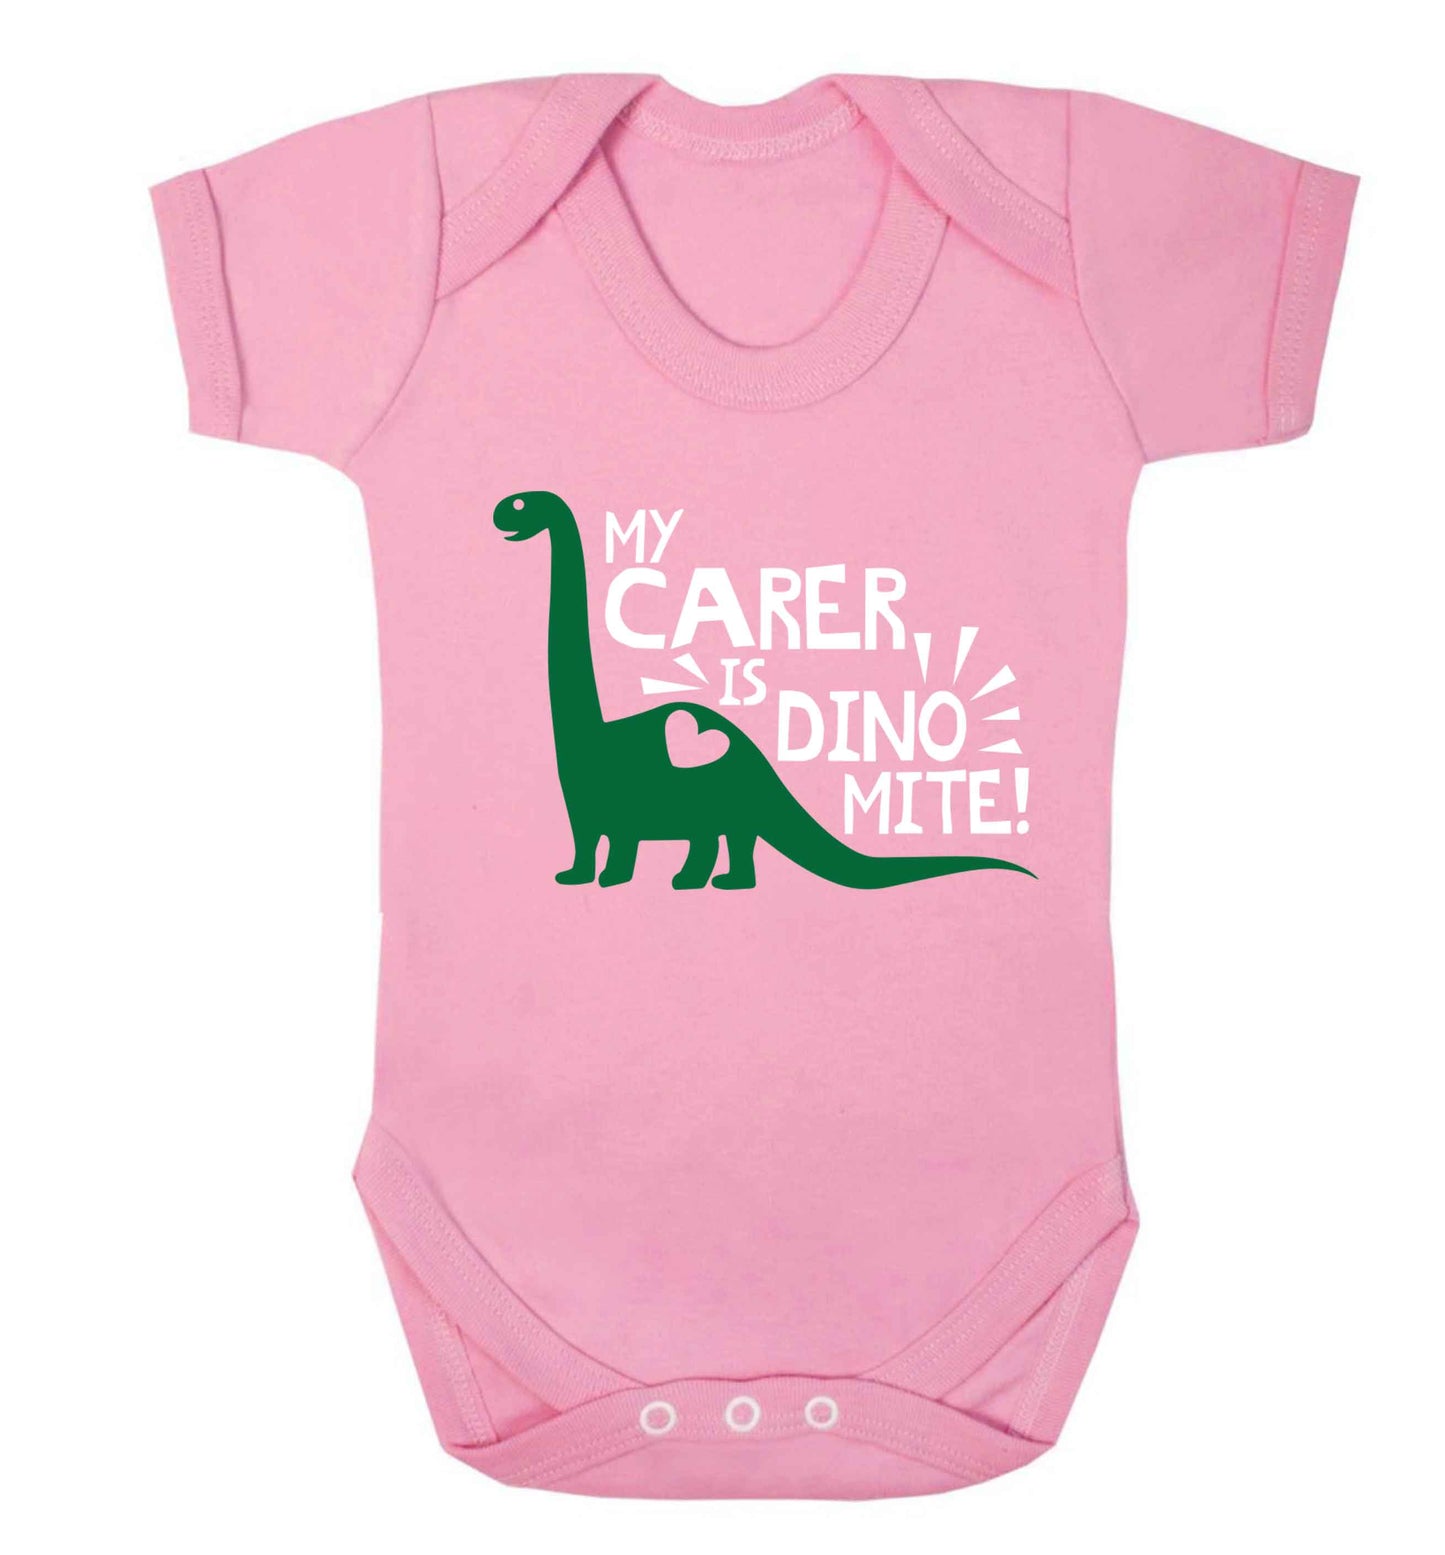 My carer is dinomite! Baby Vest pale pink 18-24 months